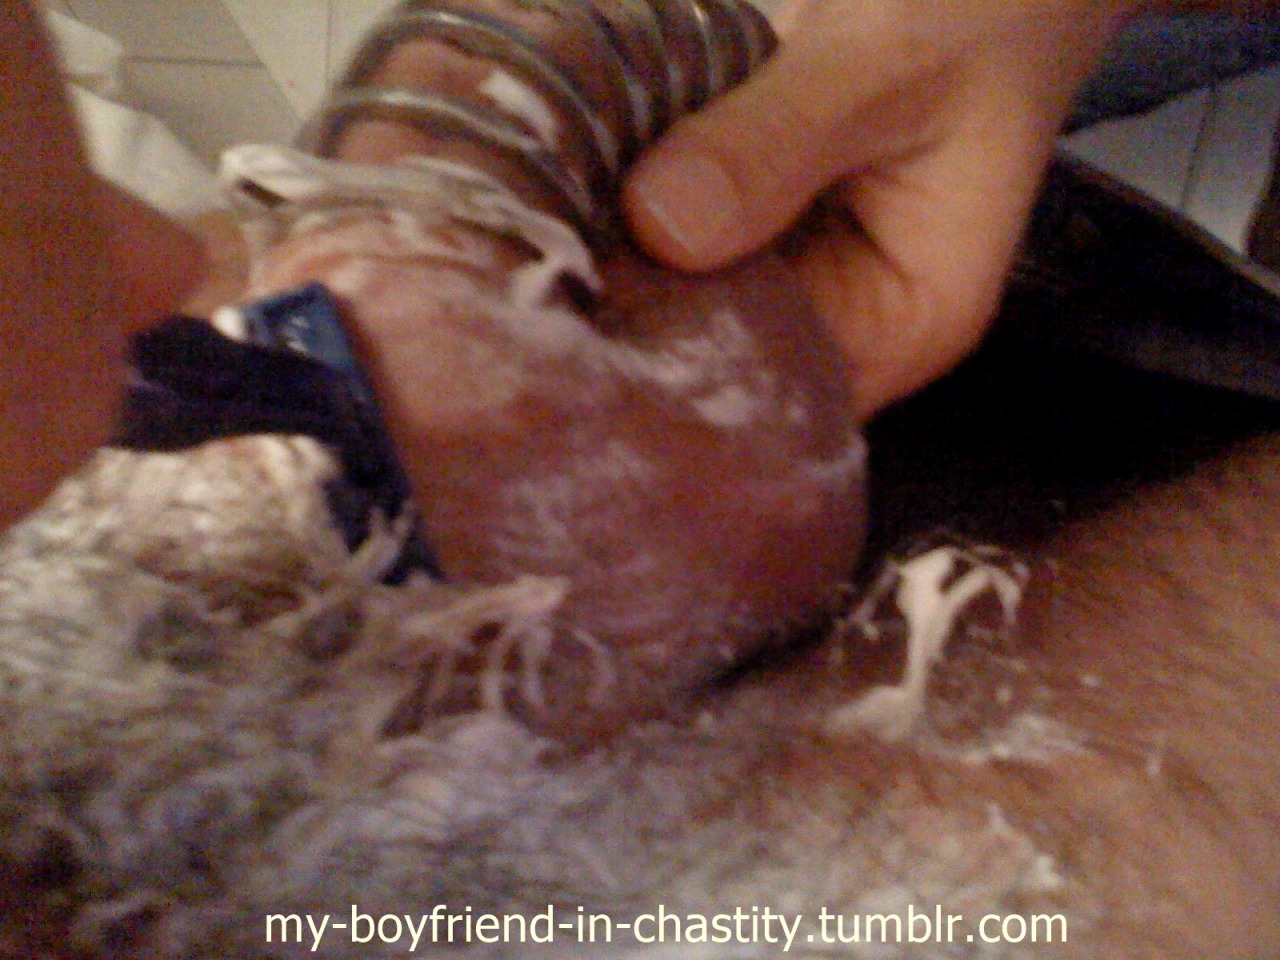 orgasm denial masculine gimp 9 on pics.alisextube.com